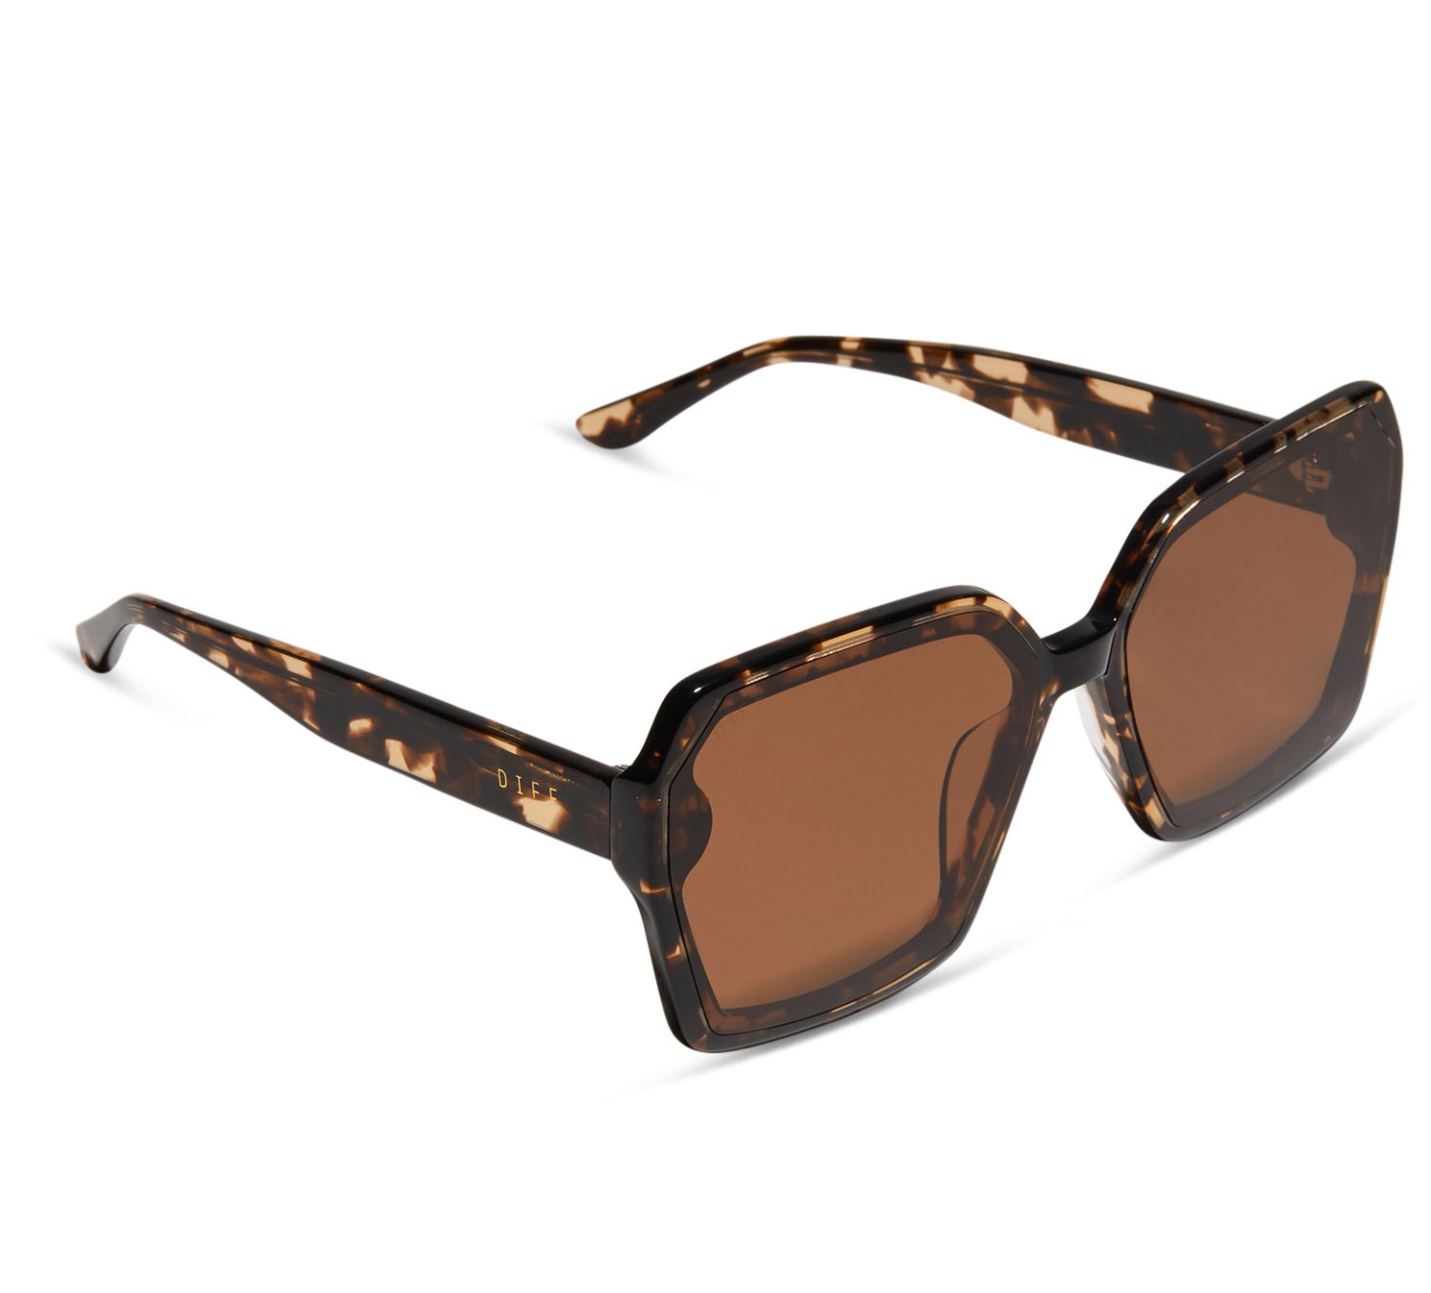 Presley Espresso Tortoise + Brown Sunglasses